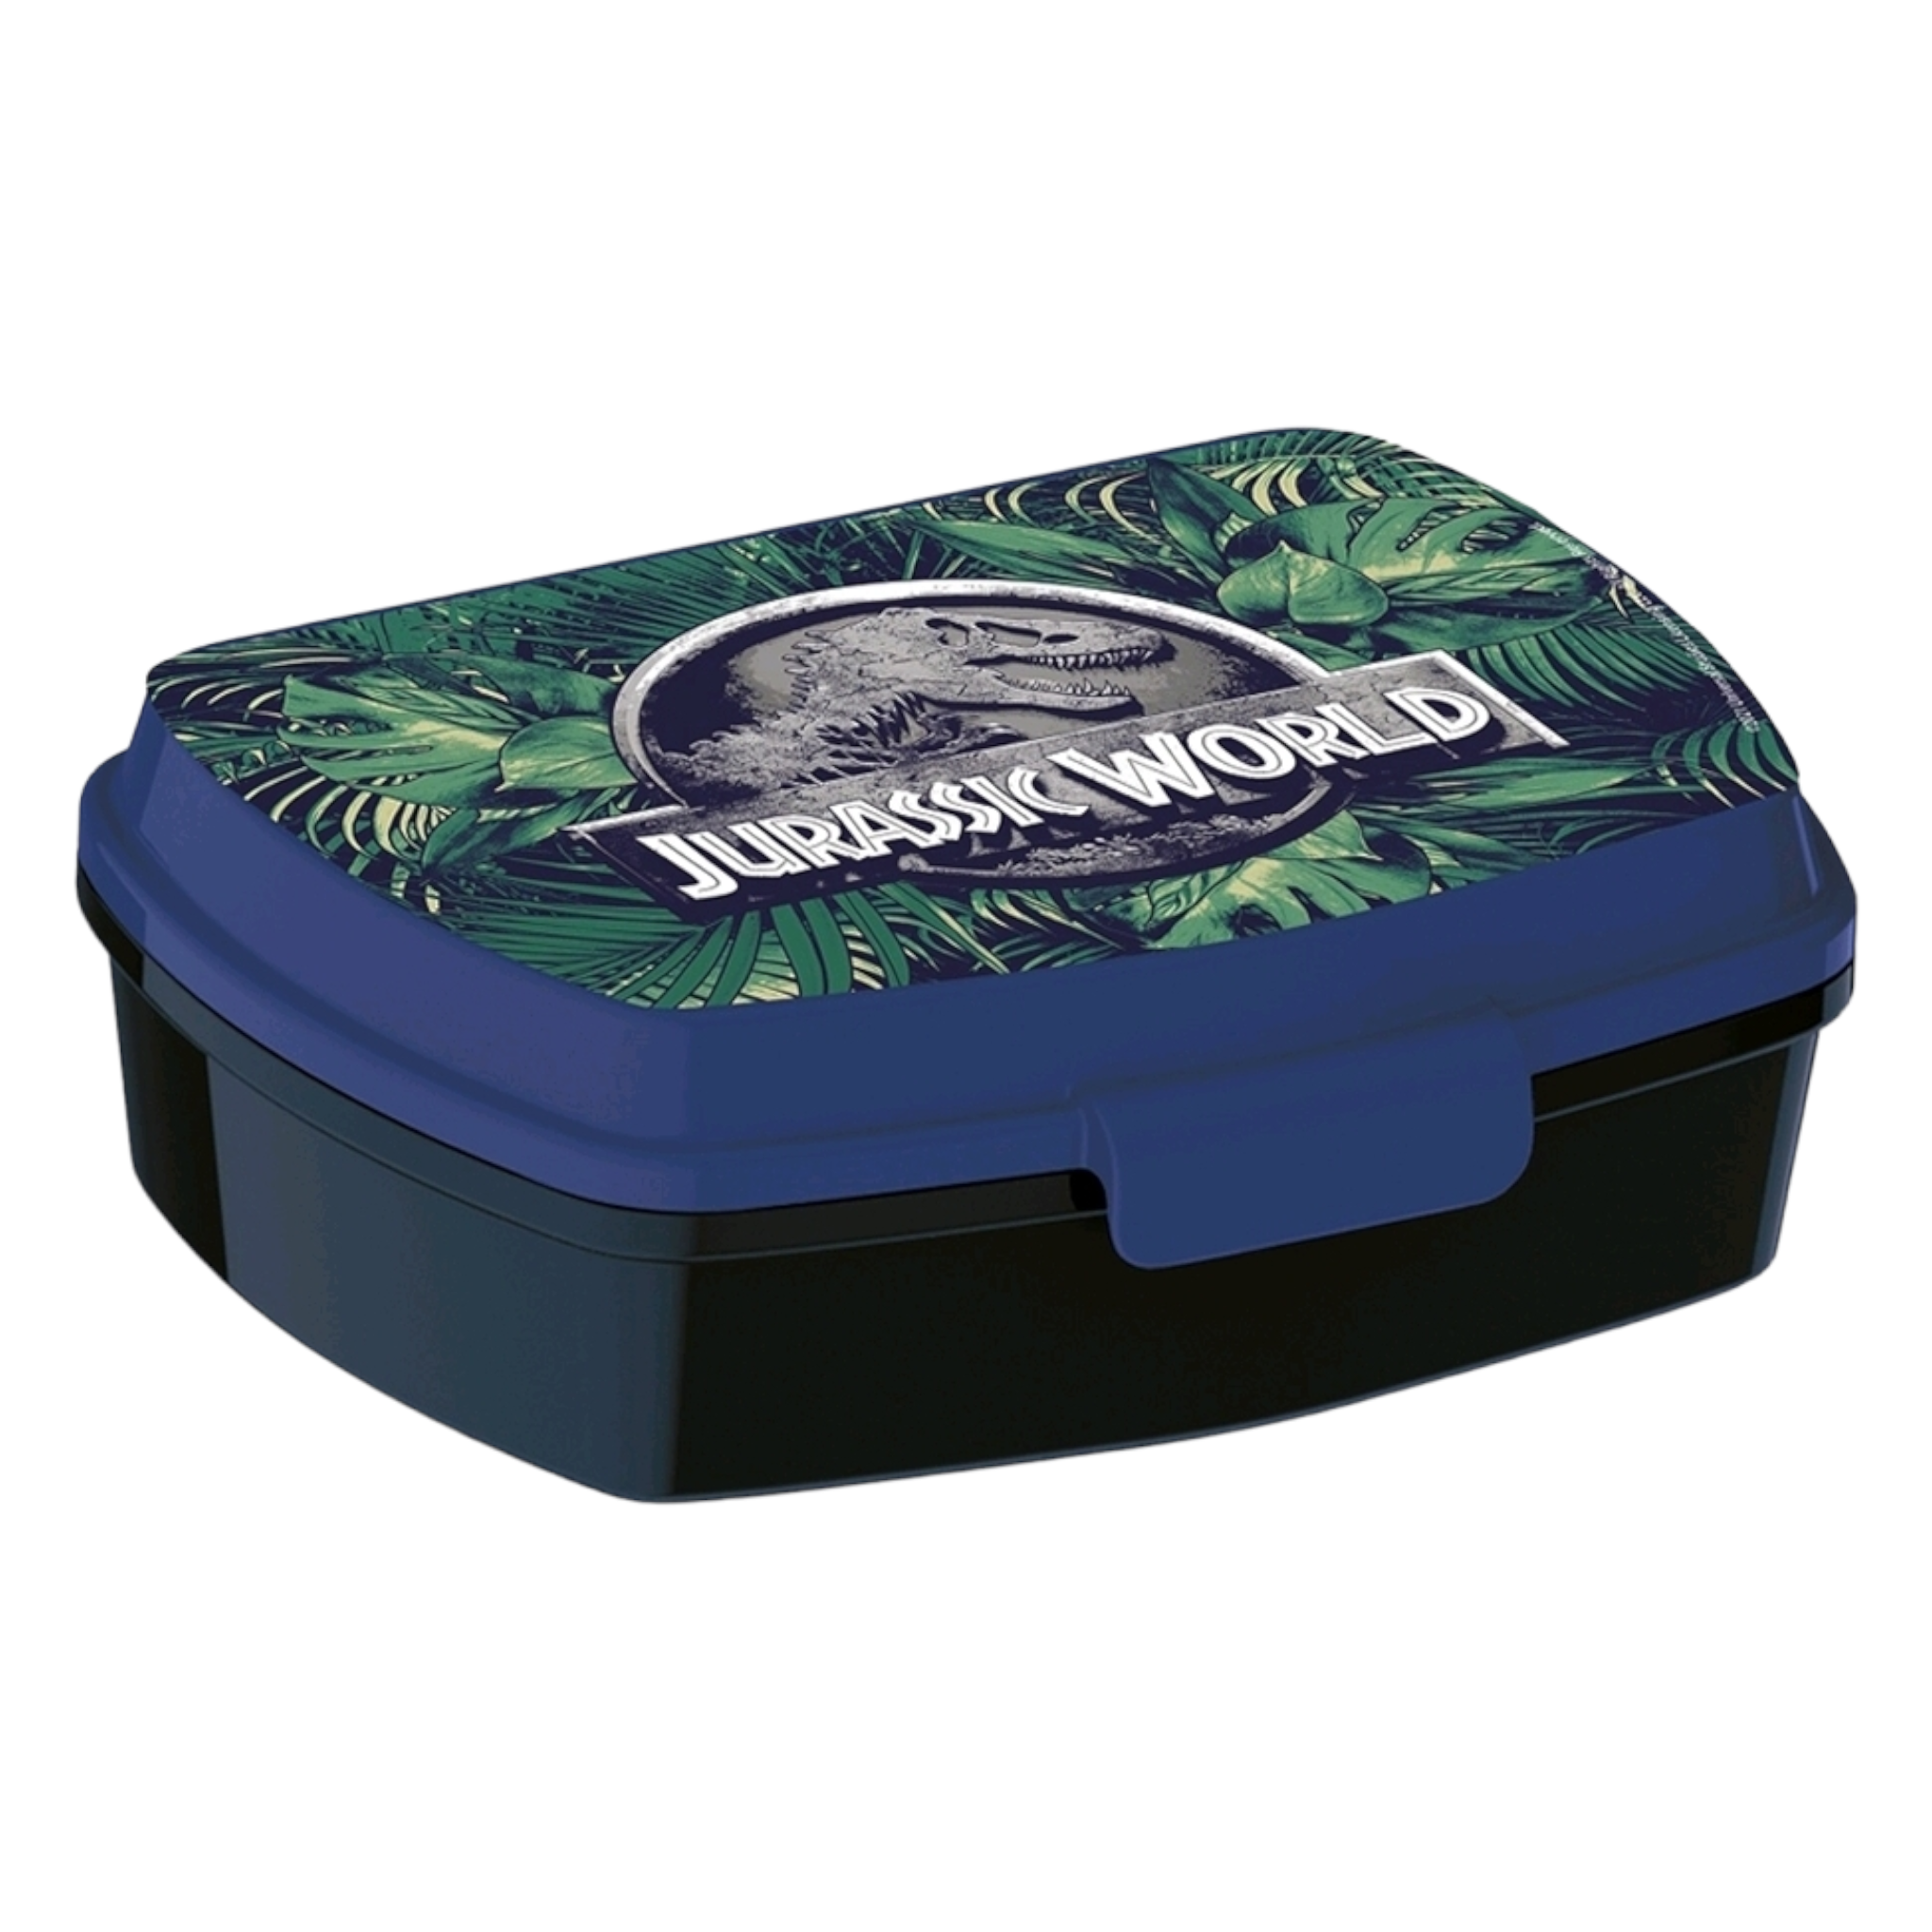 Disney Jurassic World Sandwich Lunch Box 20038